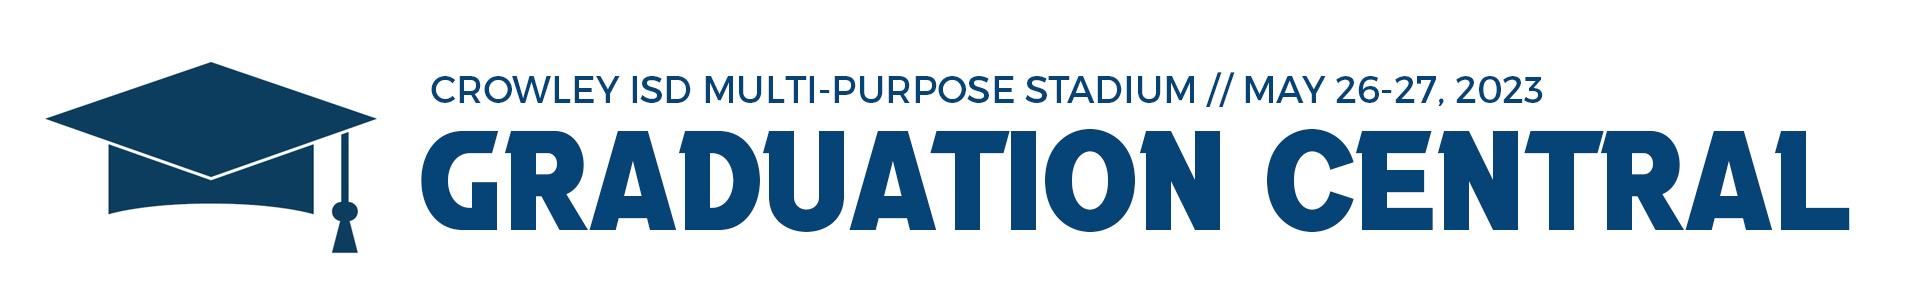 Crowley ISD Multi-Purpose Stadium // May 26-27, 2023, Graduation Central